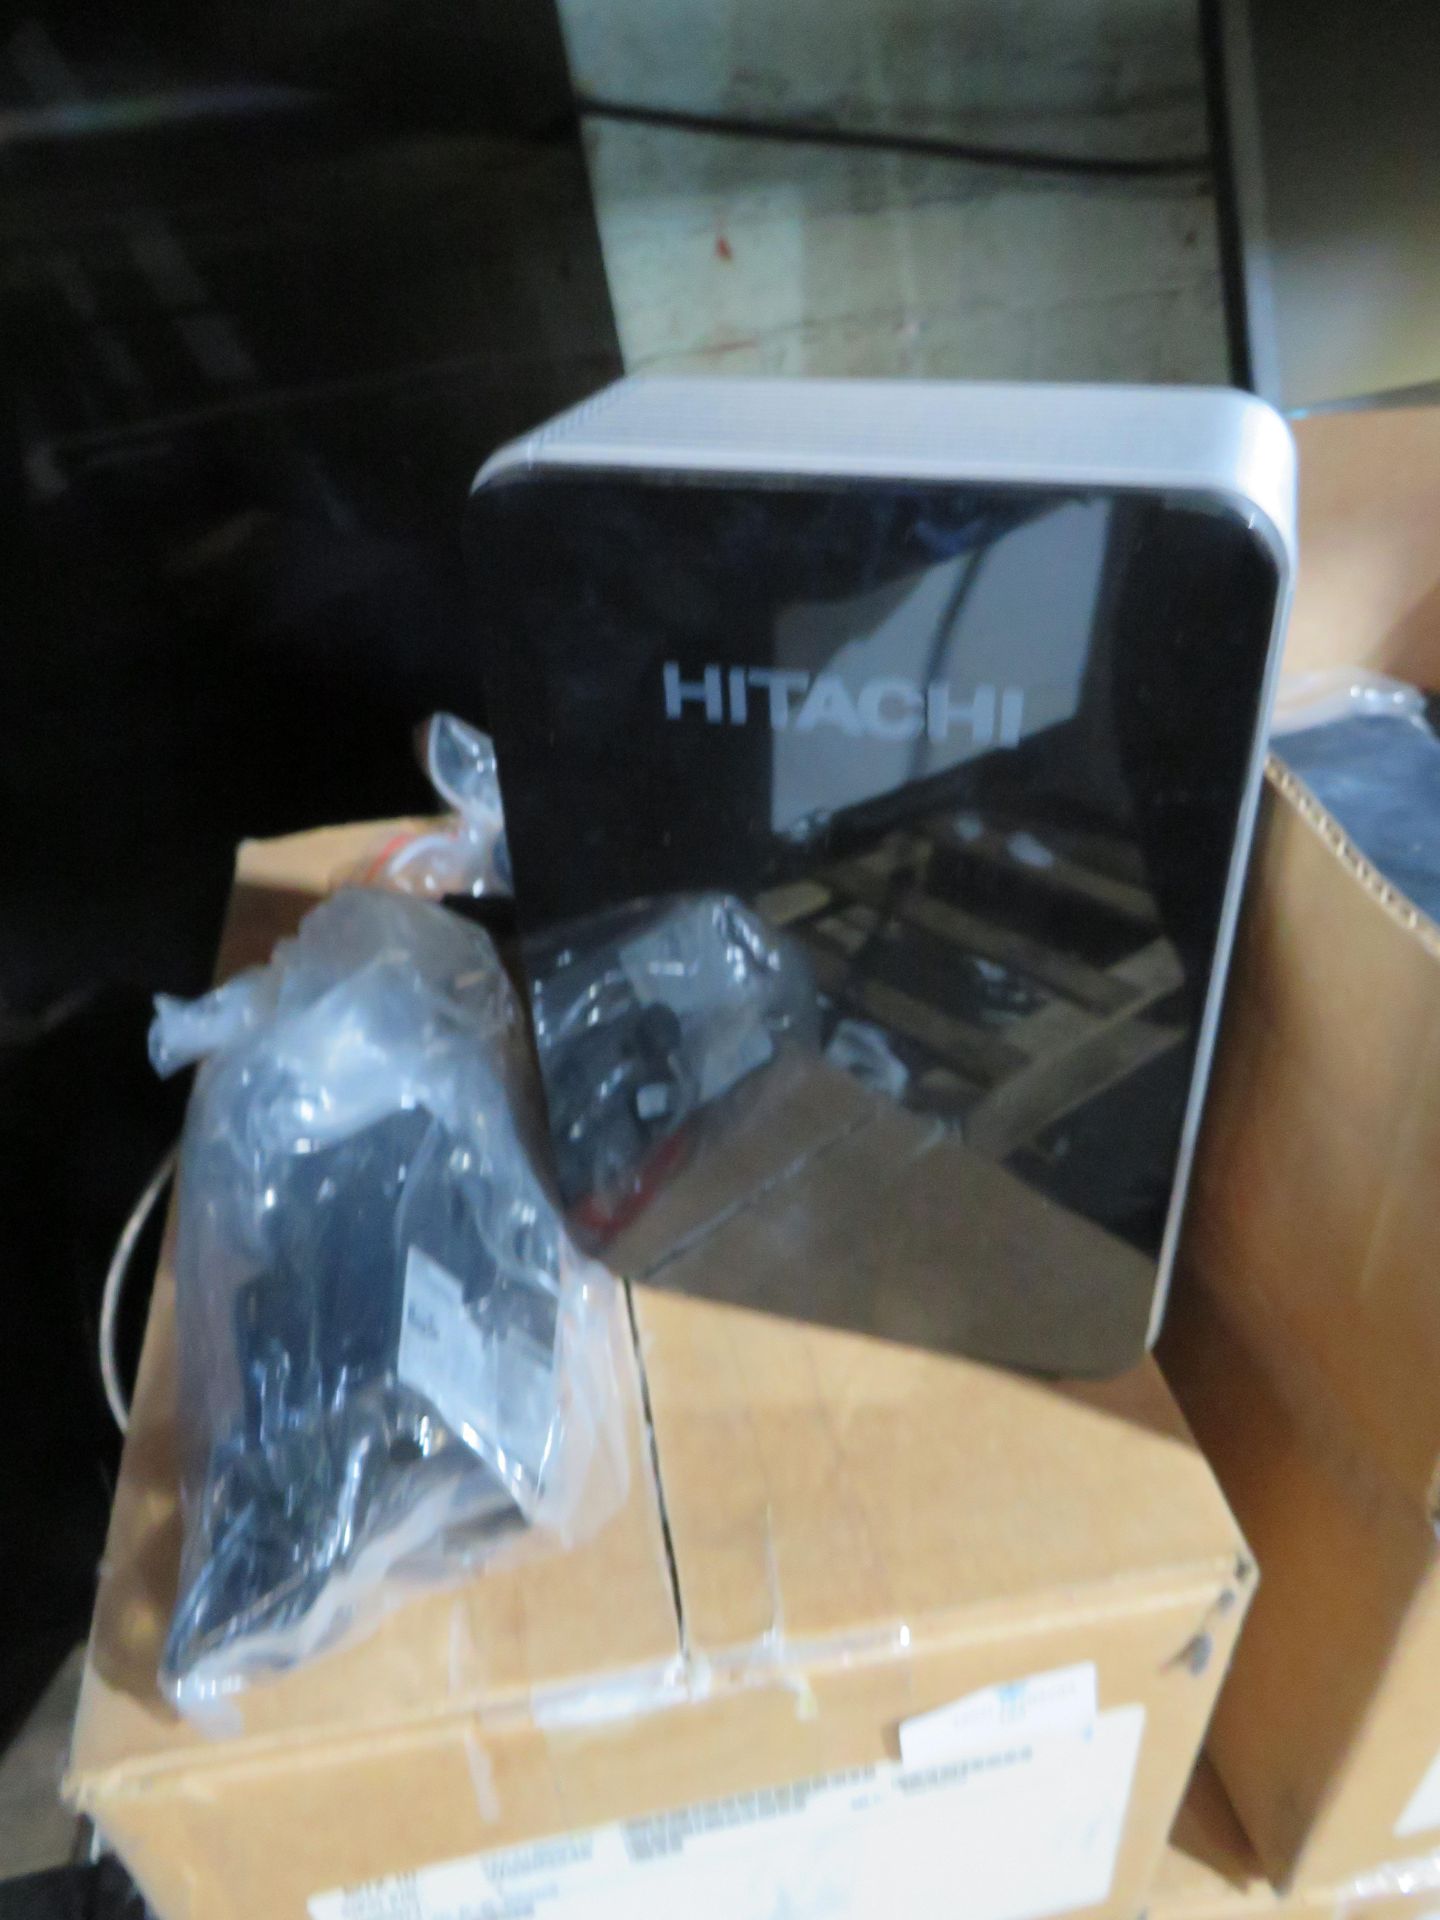 Hitachi Touro Desk Top 2TB Storage External Hard Drive boxed unchecked